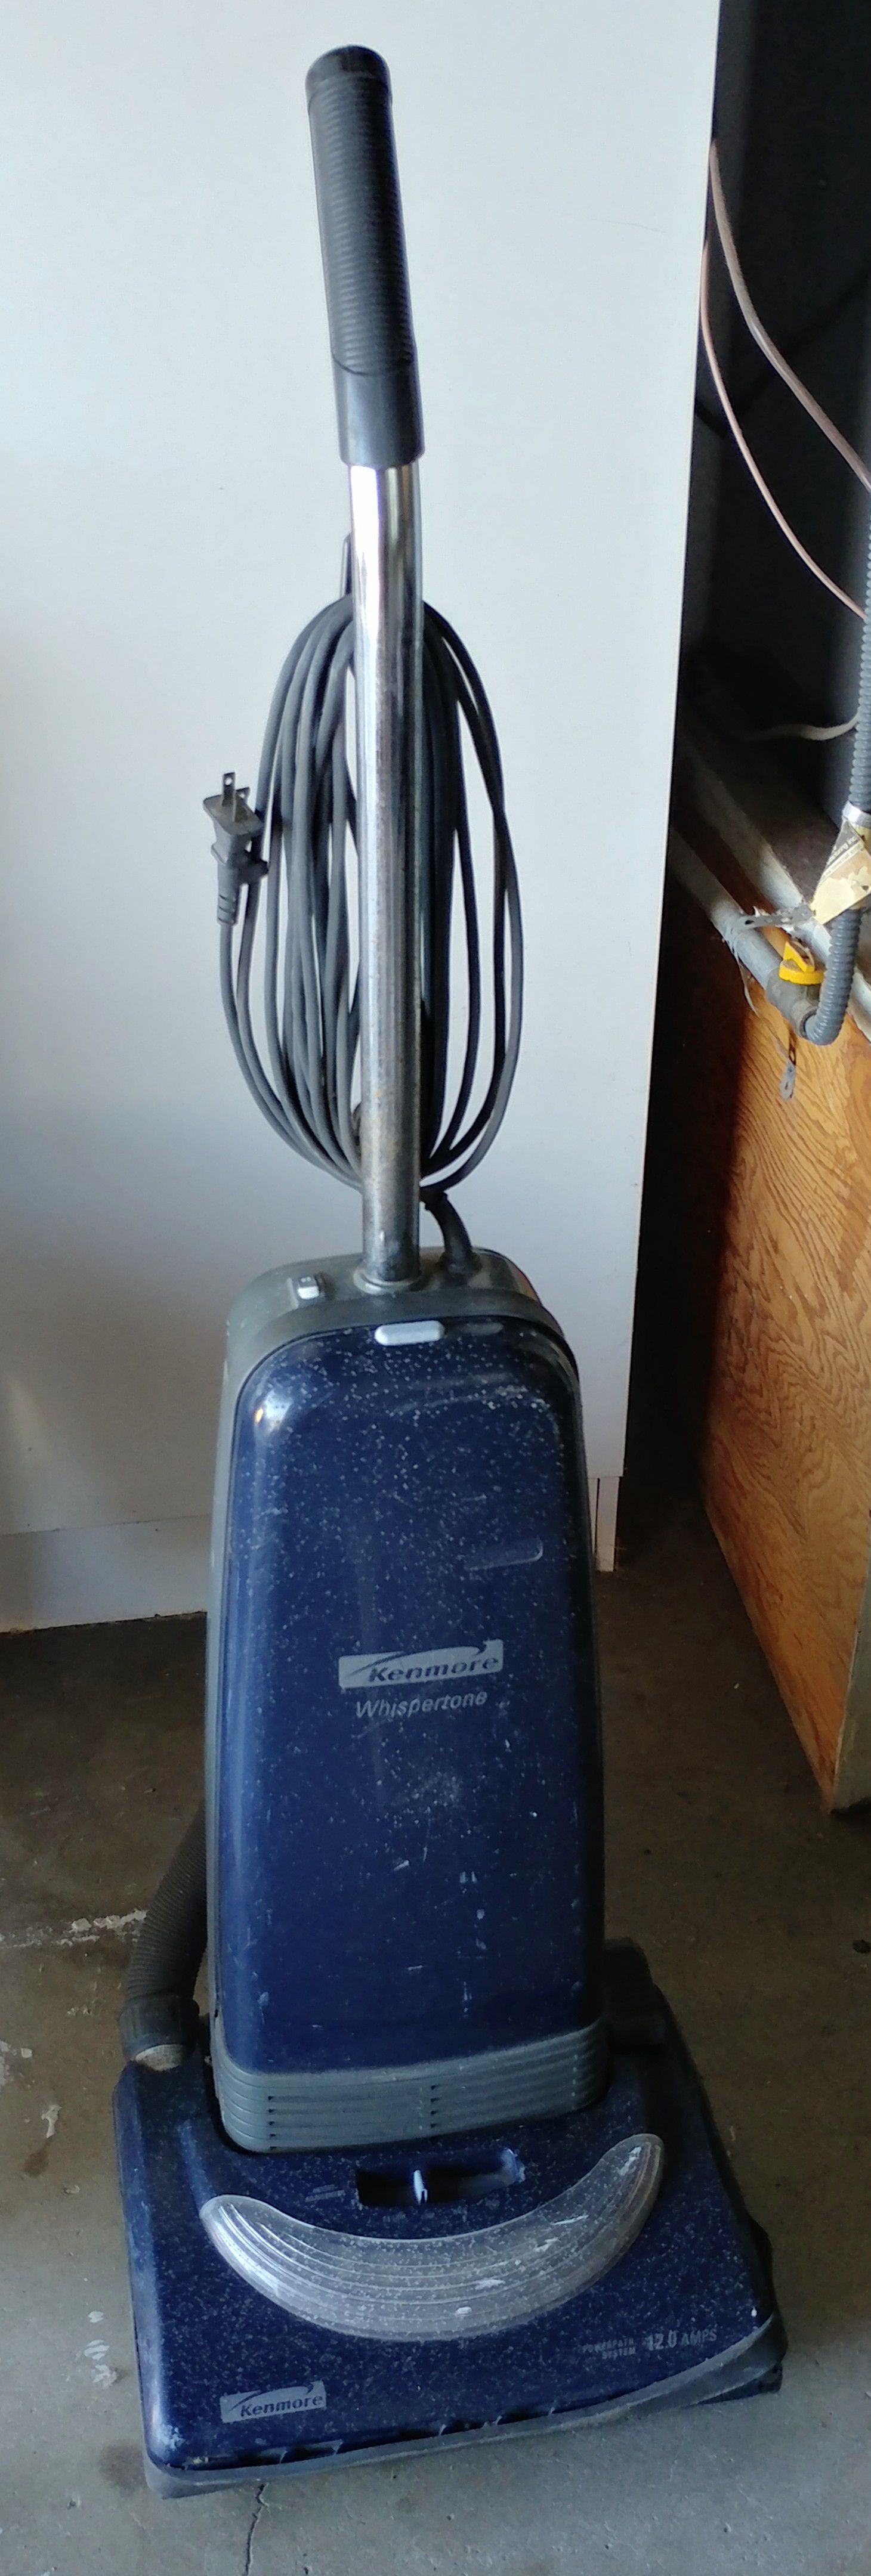 Kenmore Whispertone Vacuum Cleaner